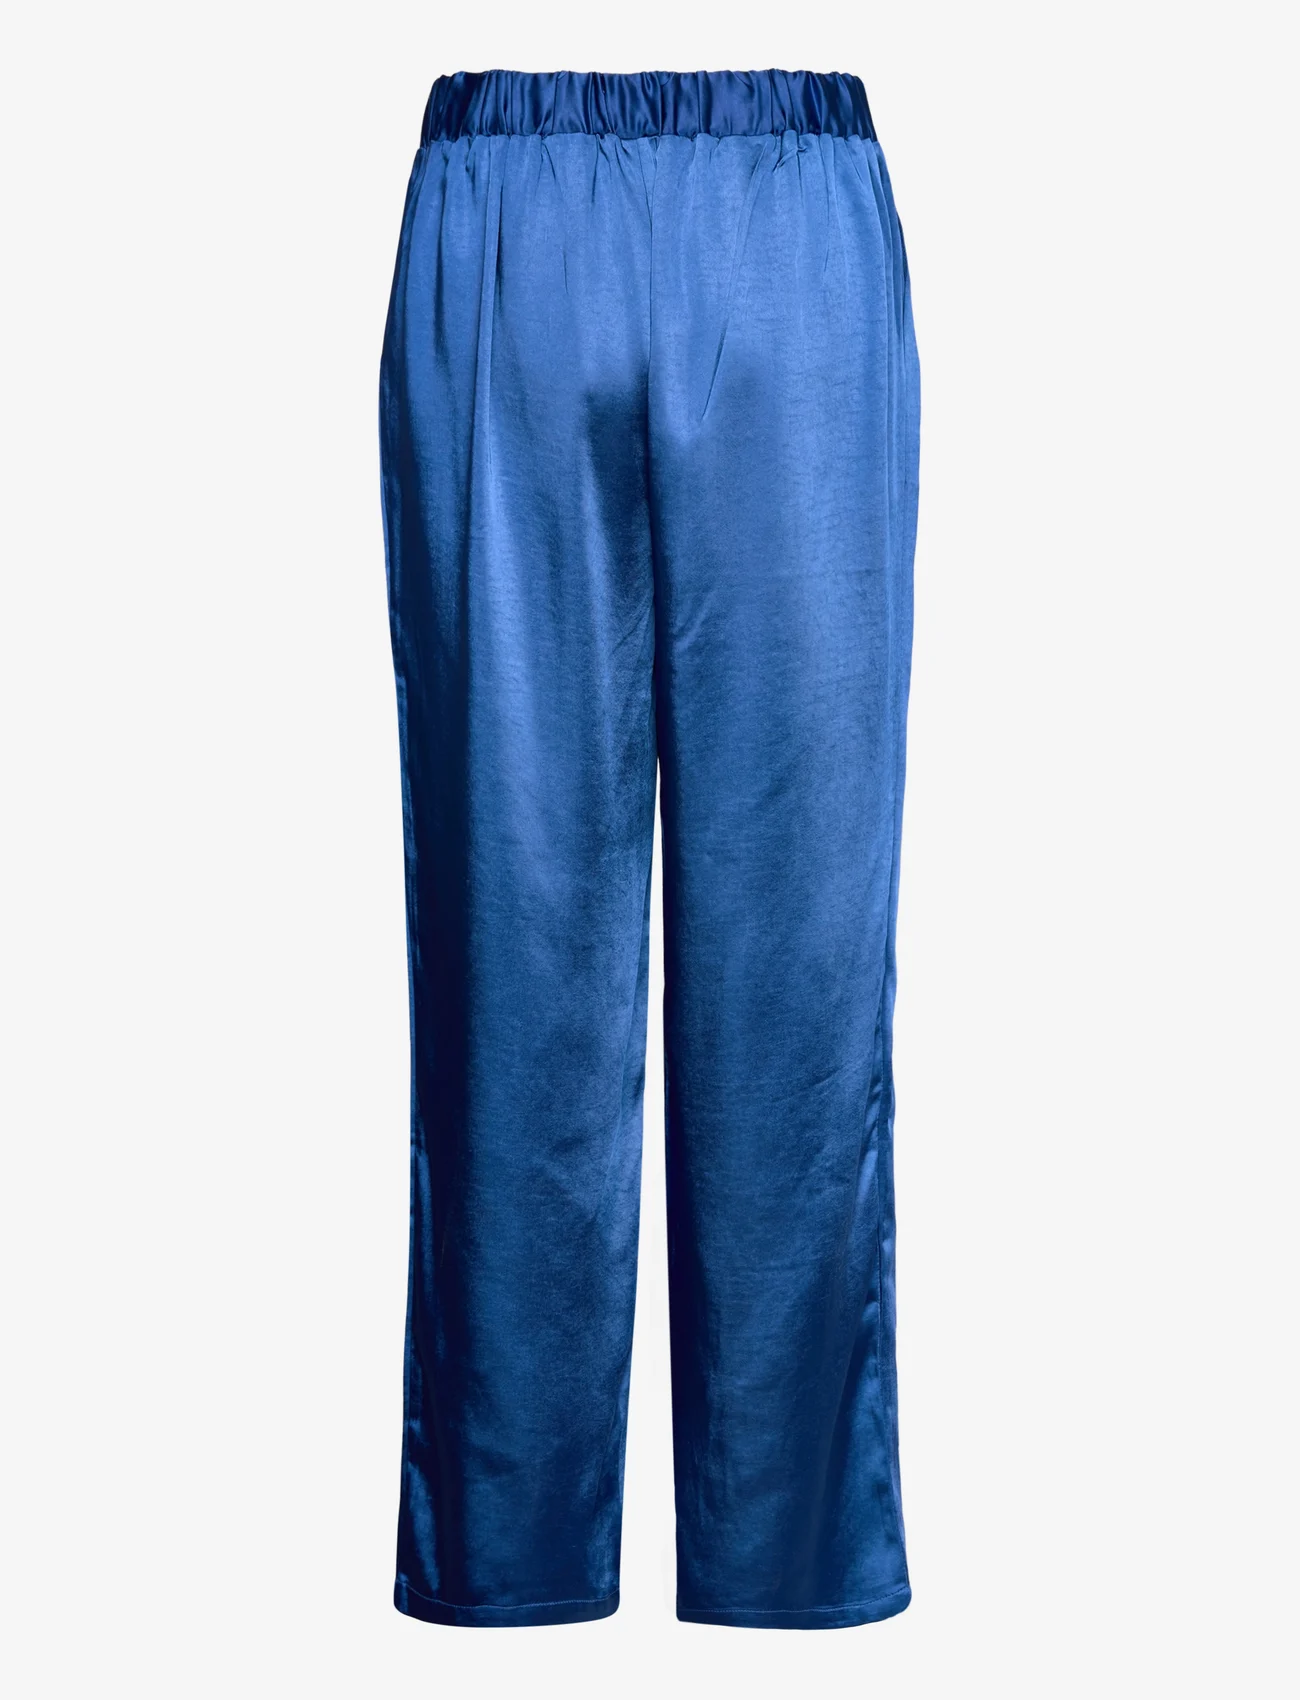 Lollys Laundry - Henry Pants - wide leg trousers - neon blue - 1